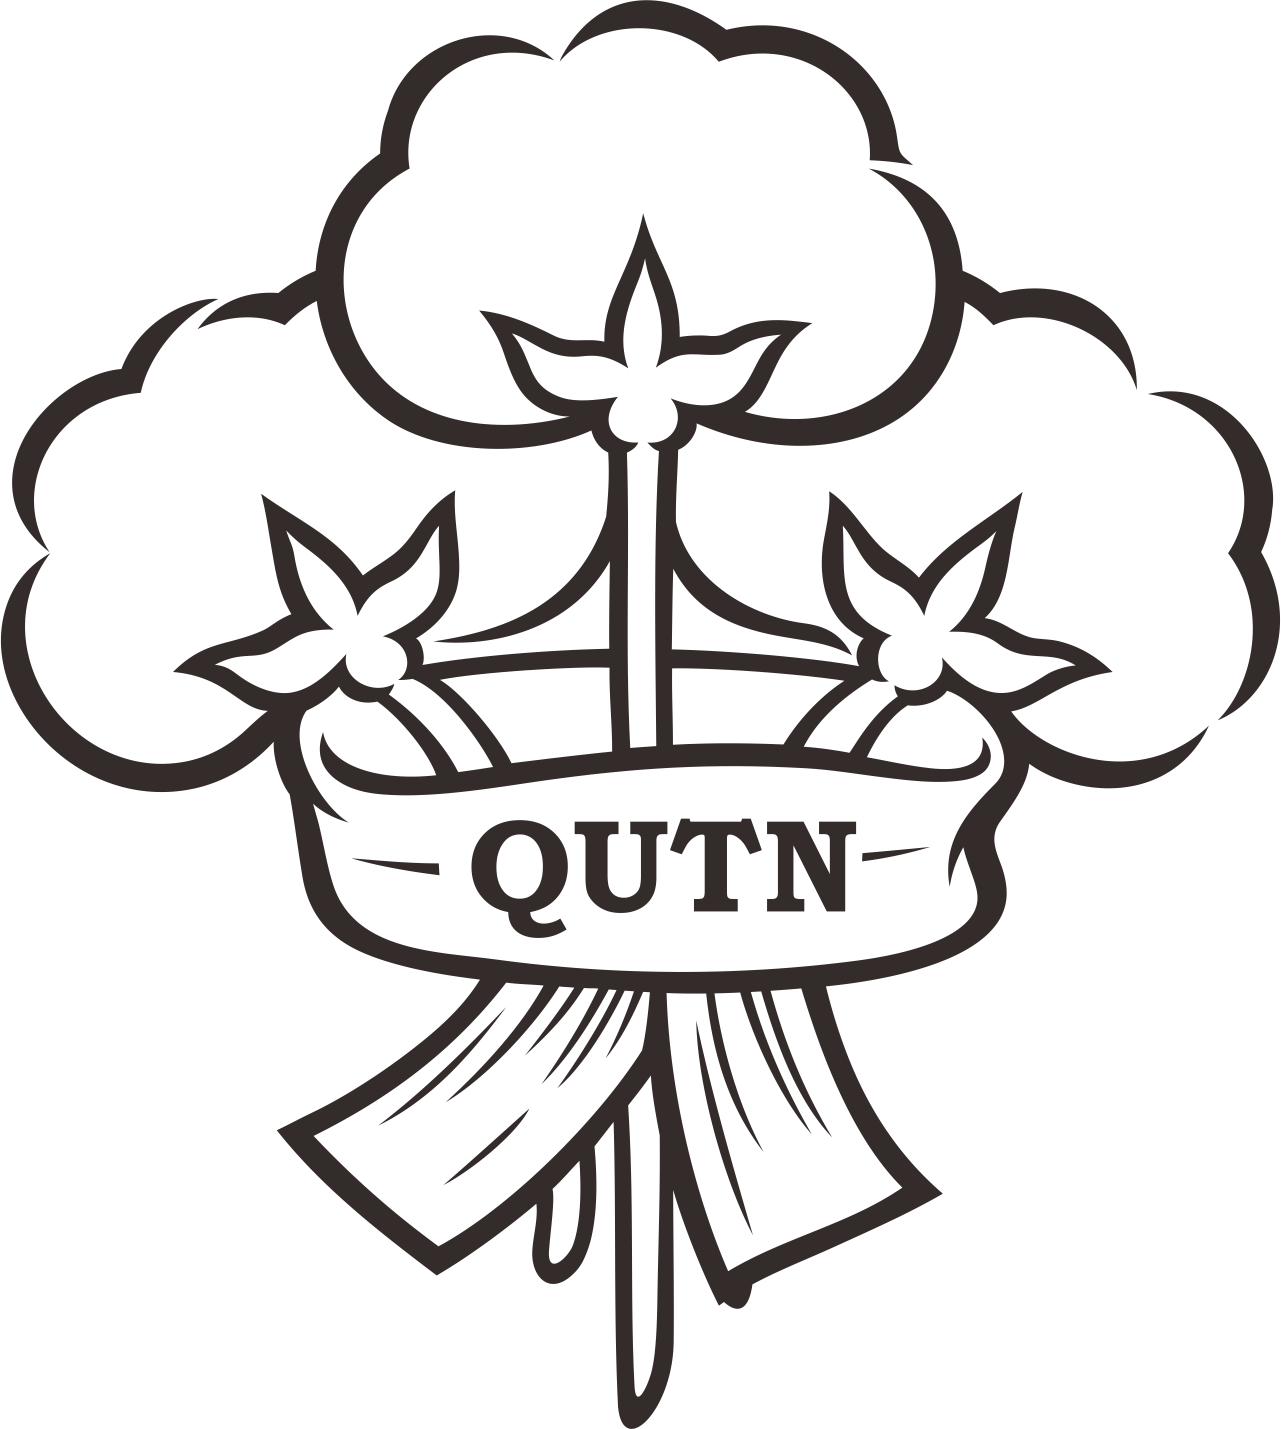 The Qutn